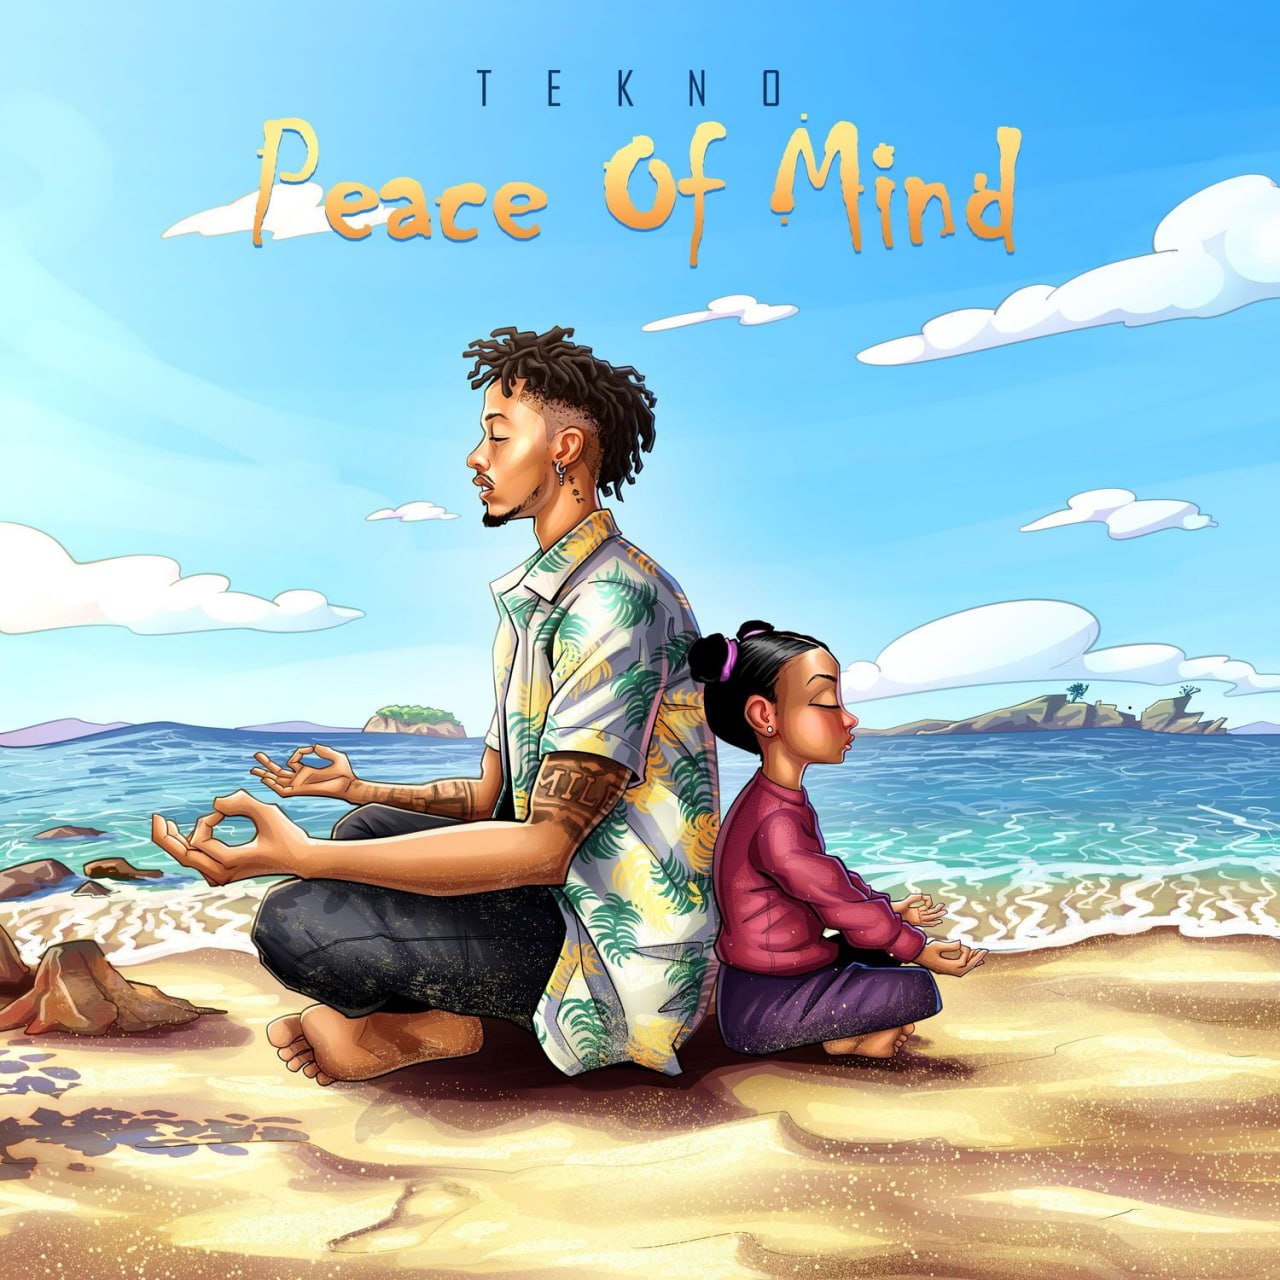 Peace of mind - Tekno